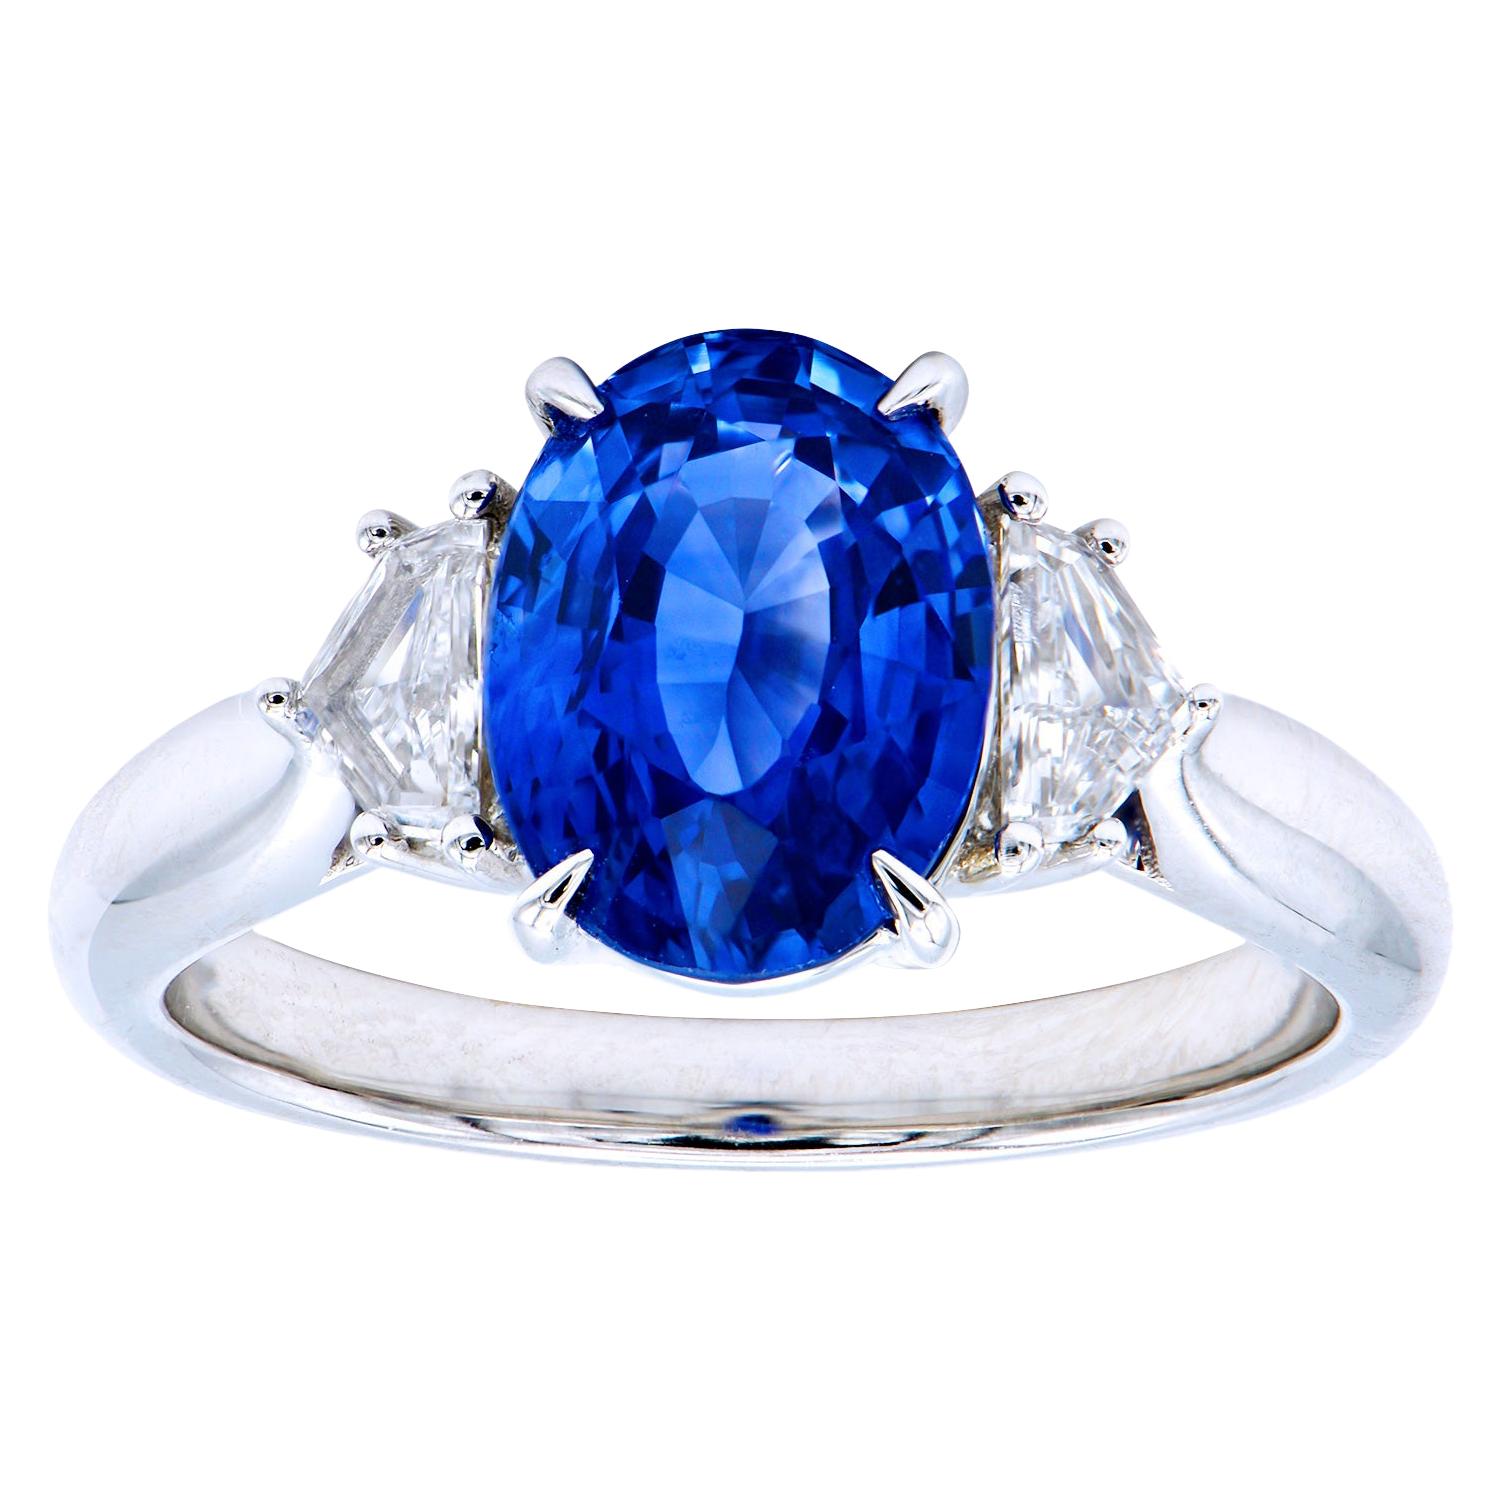 3.01 Carat Oval Blue Sapphire Ring with Diamond Epaulets